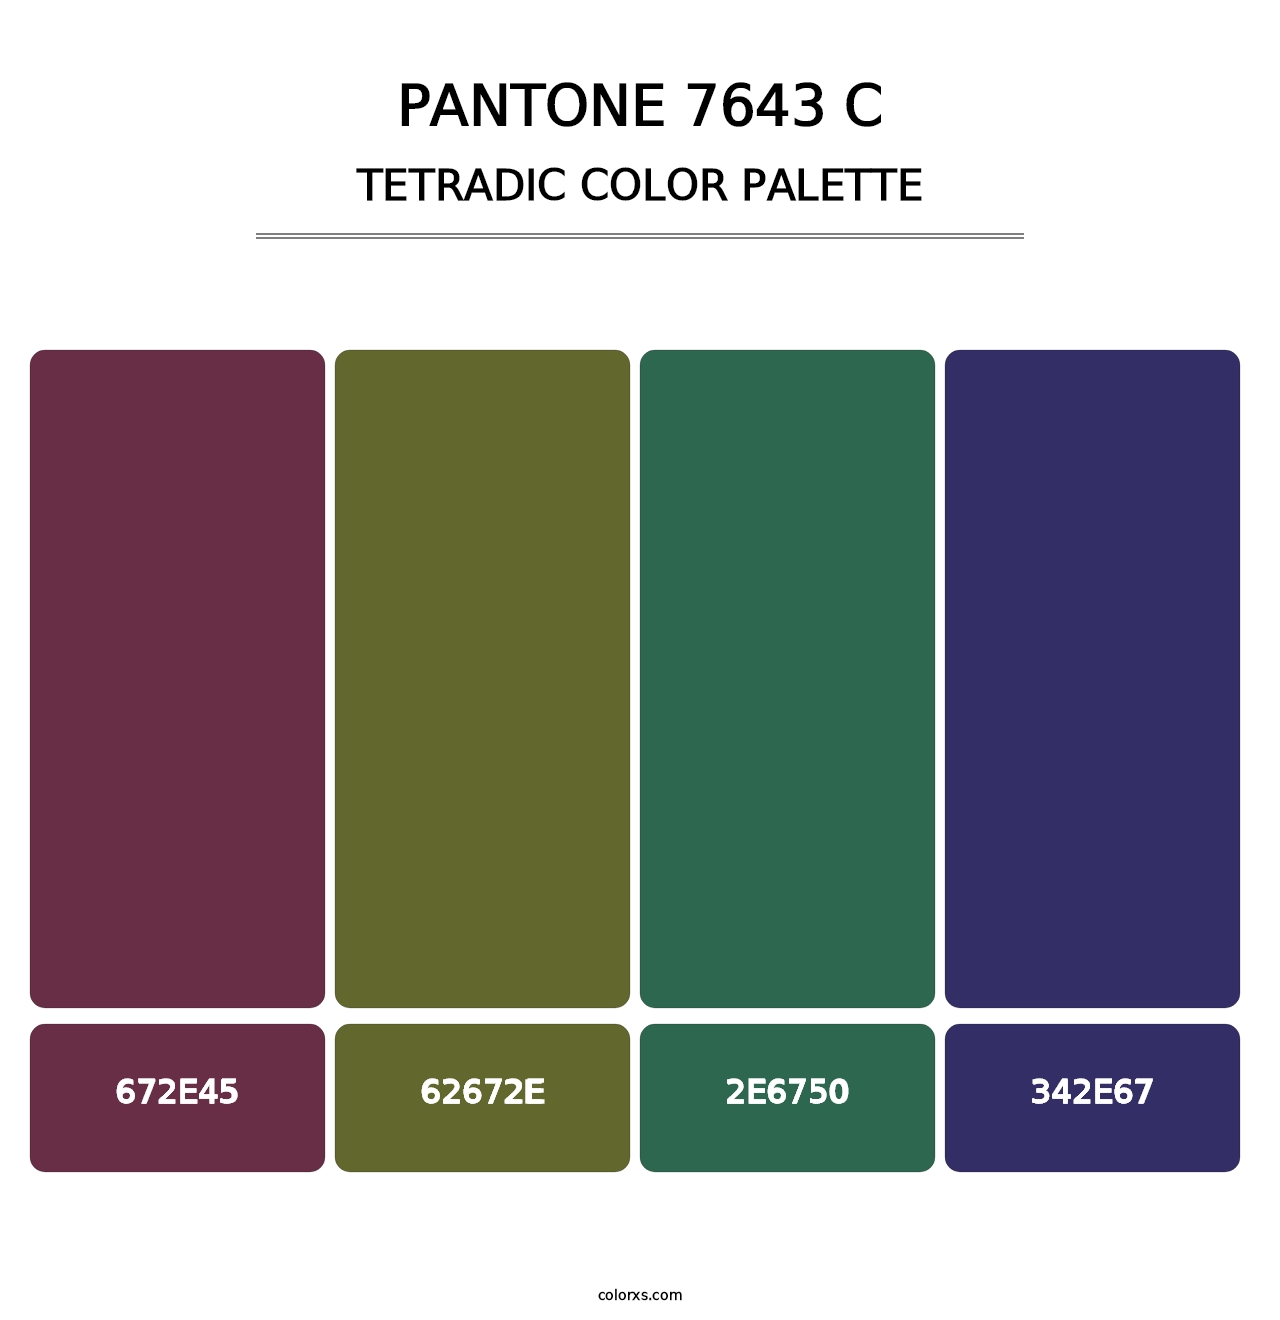 PANTONE 7643 C - Tetradic Color Palette